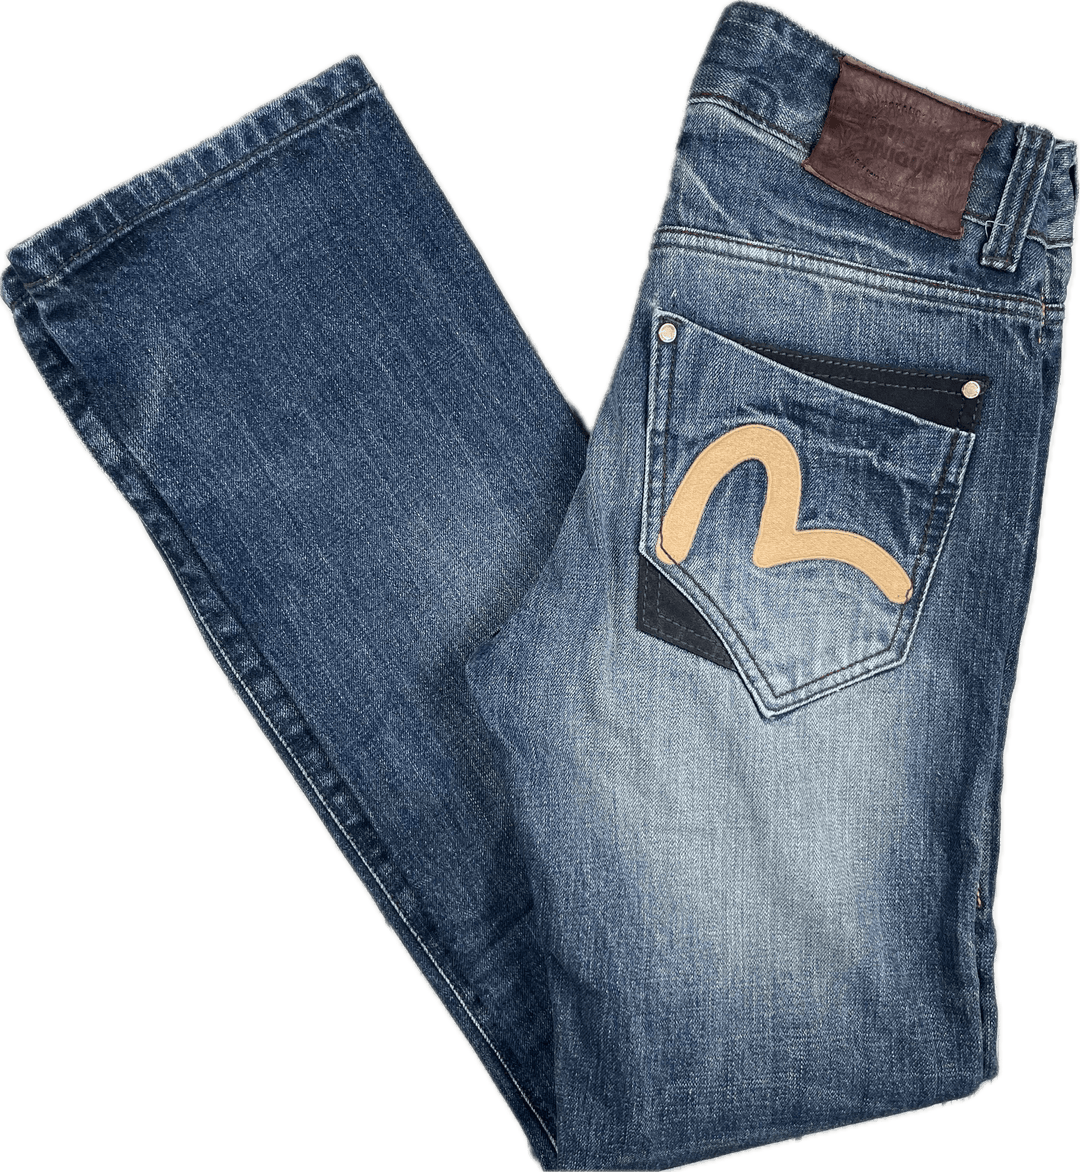 Evisu Jeans Japan Logo Print Pocket Jeans - Size 28 - Jean Pool